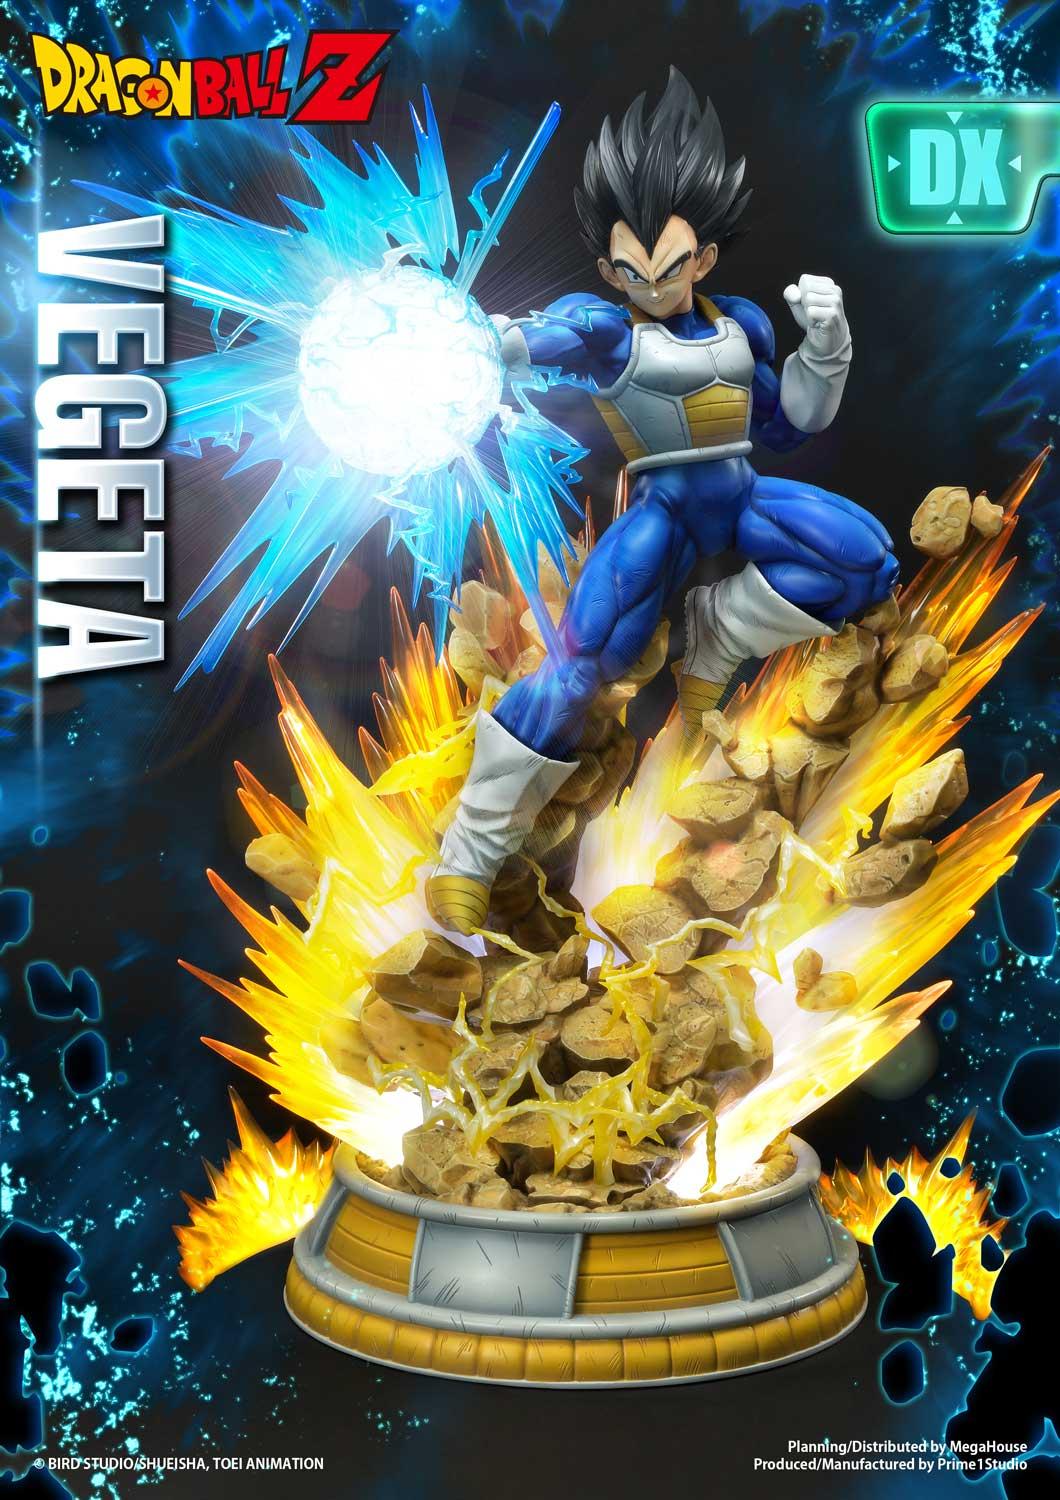 Dragon Ball Z Vegeta Final Flash 1/4 Scale Limited Edition Figure